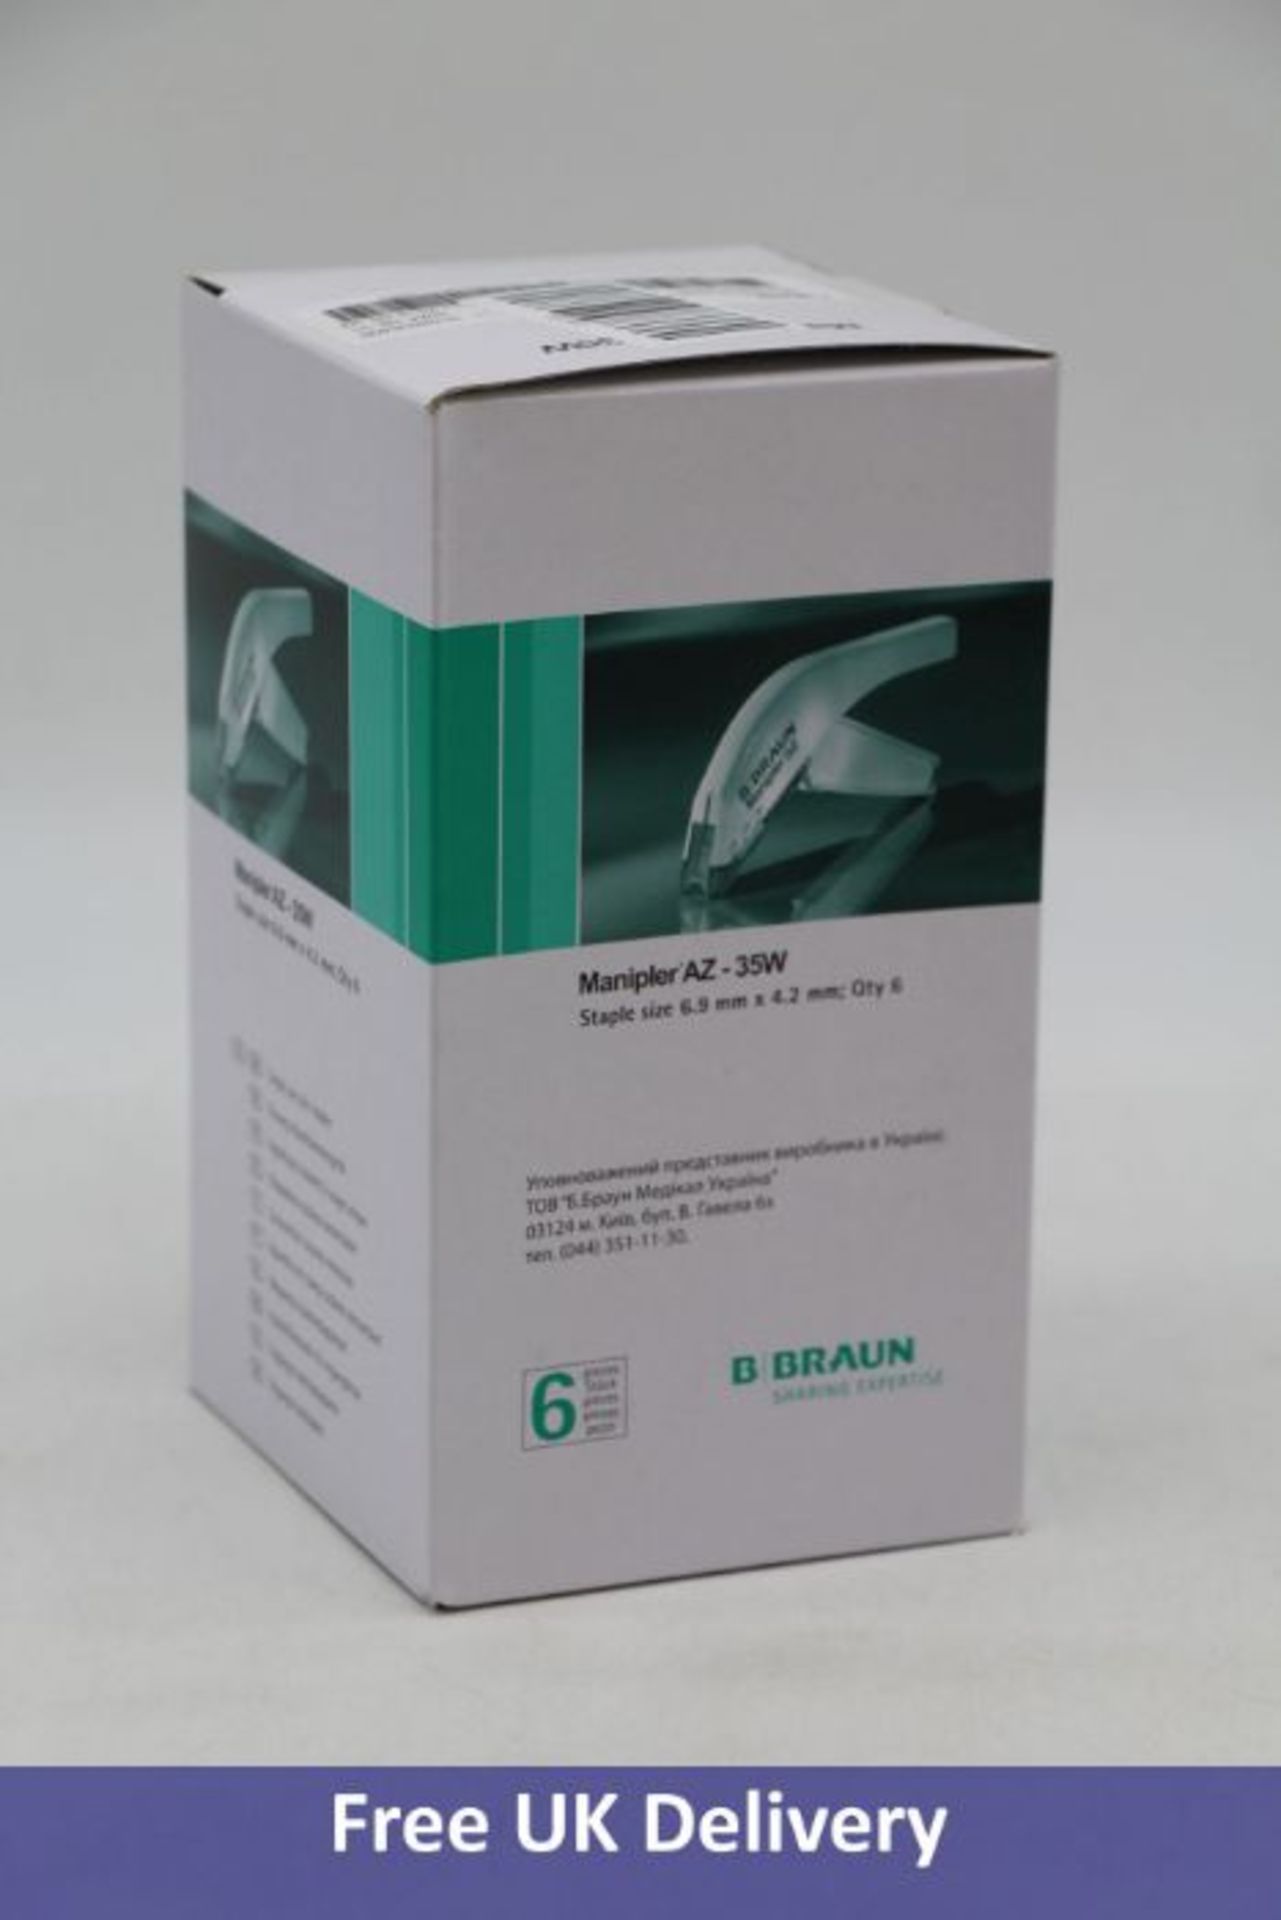 Eight Braun Manipler AZ – 35W Skin Stapler, Size 6.9mm x 4.2mm, 6 Per Pack - Image 3 of 4